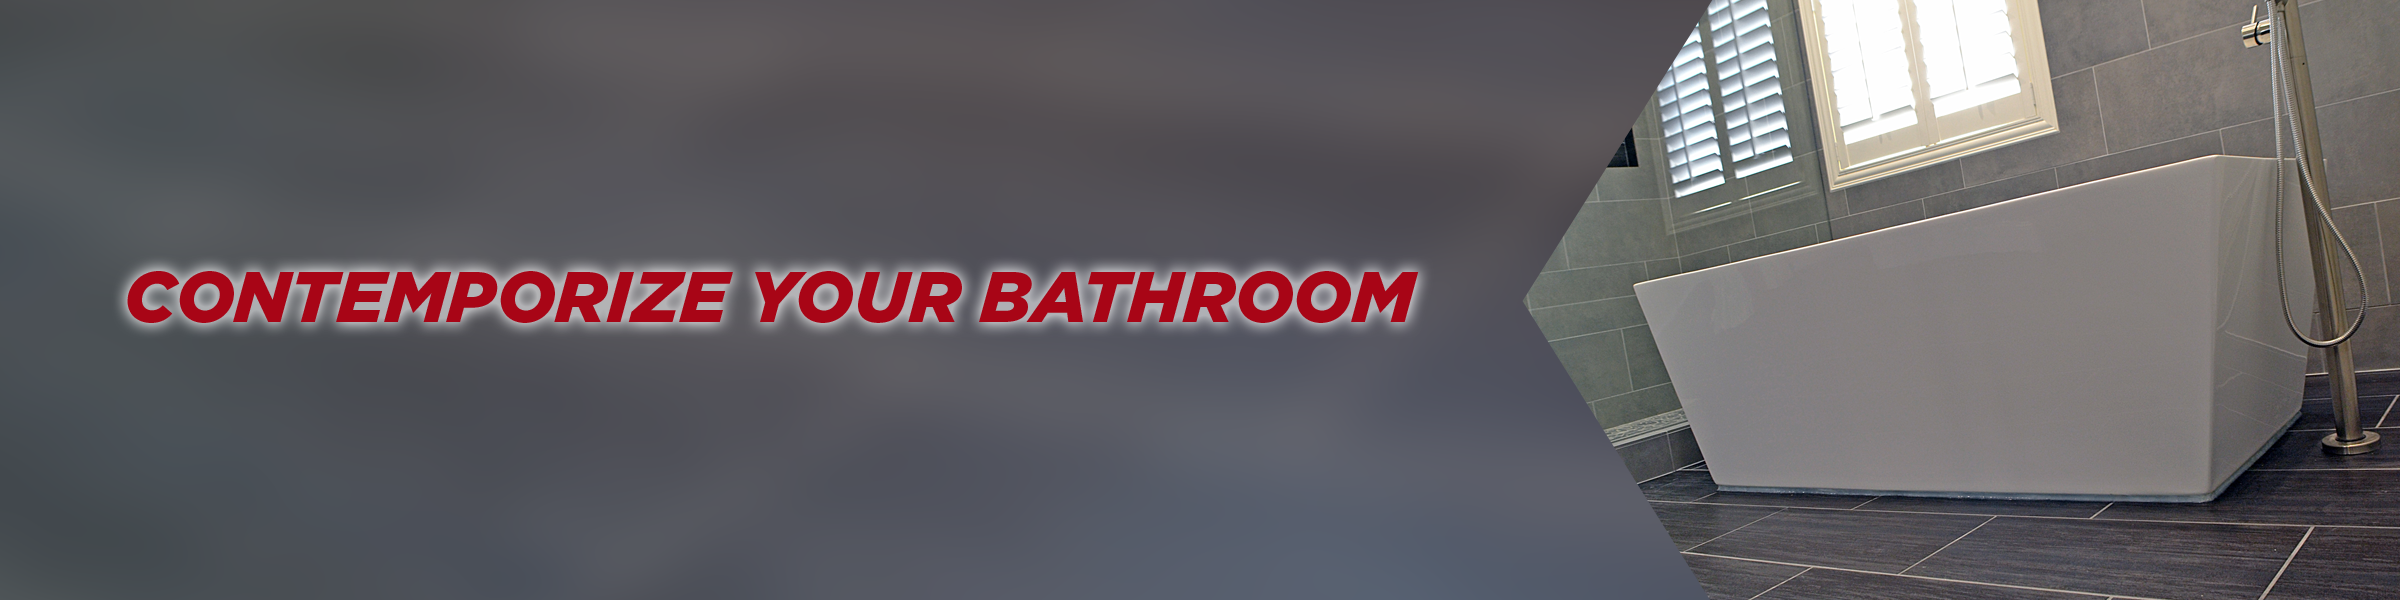 3-Contemporize-Your-Bathroom